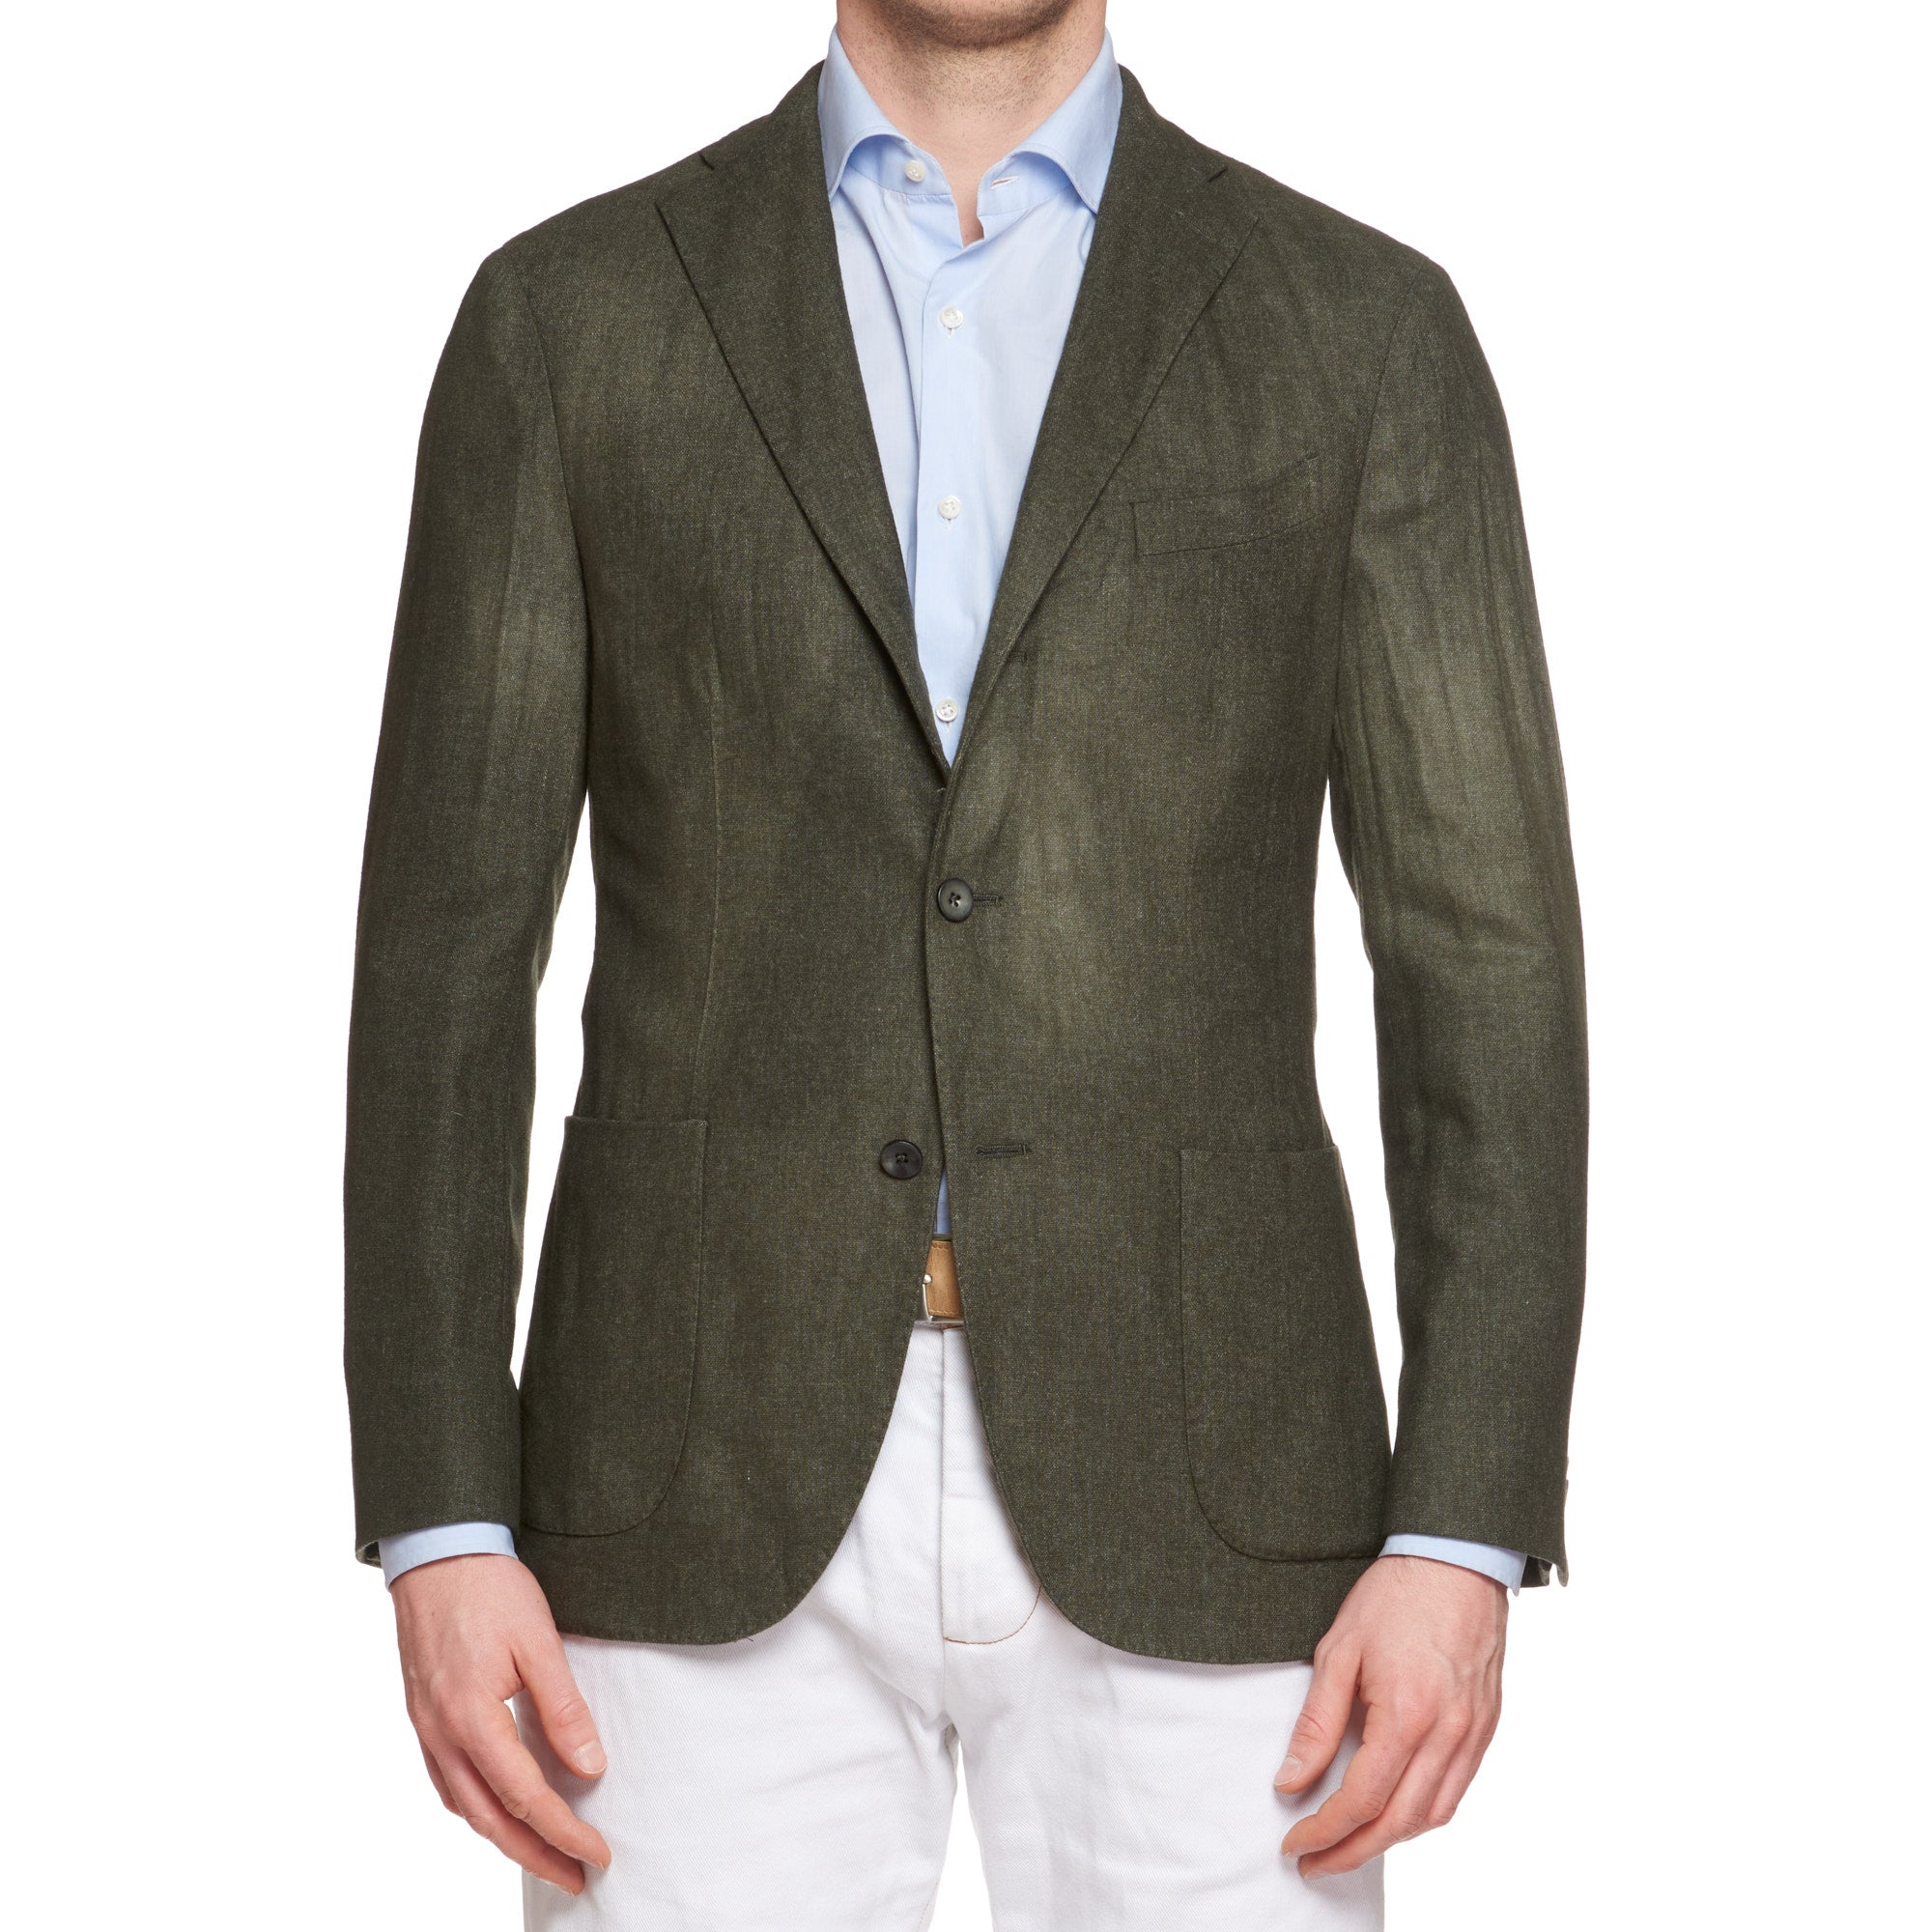 BOGLIOLI Milano "K.Jacket" Green Wool Unlined Sport Coat Jacket EU 46 NEW US 36 BOGLIOLI